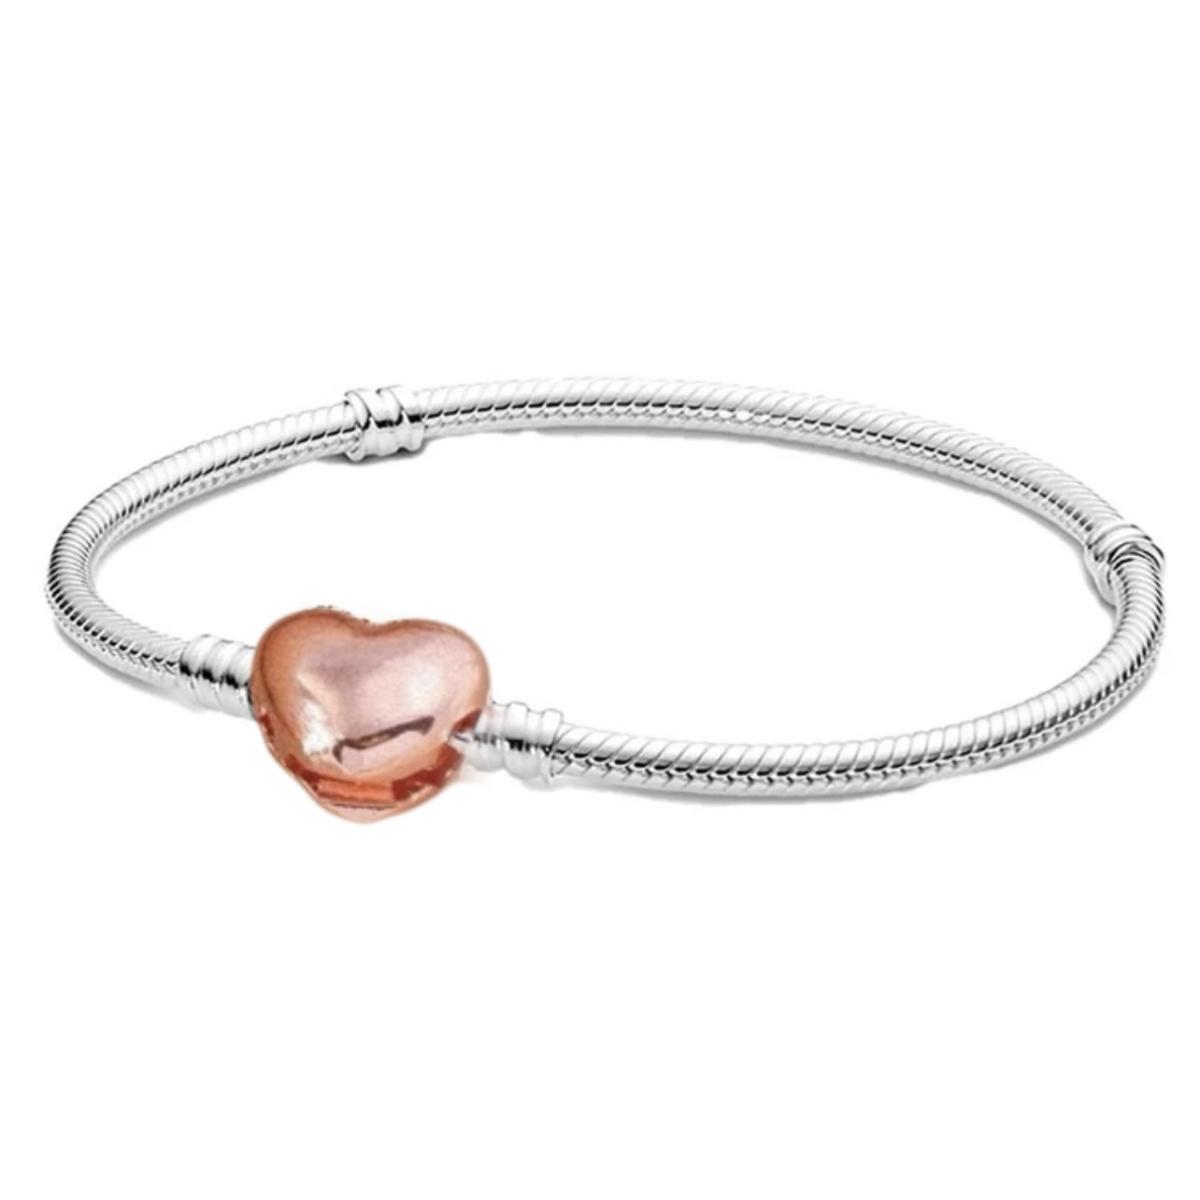 دستبند با قلب رزگلد طرح پاندورا - Heart detail barcelet